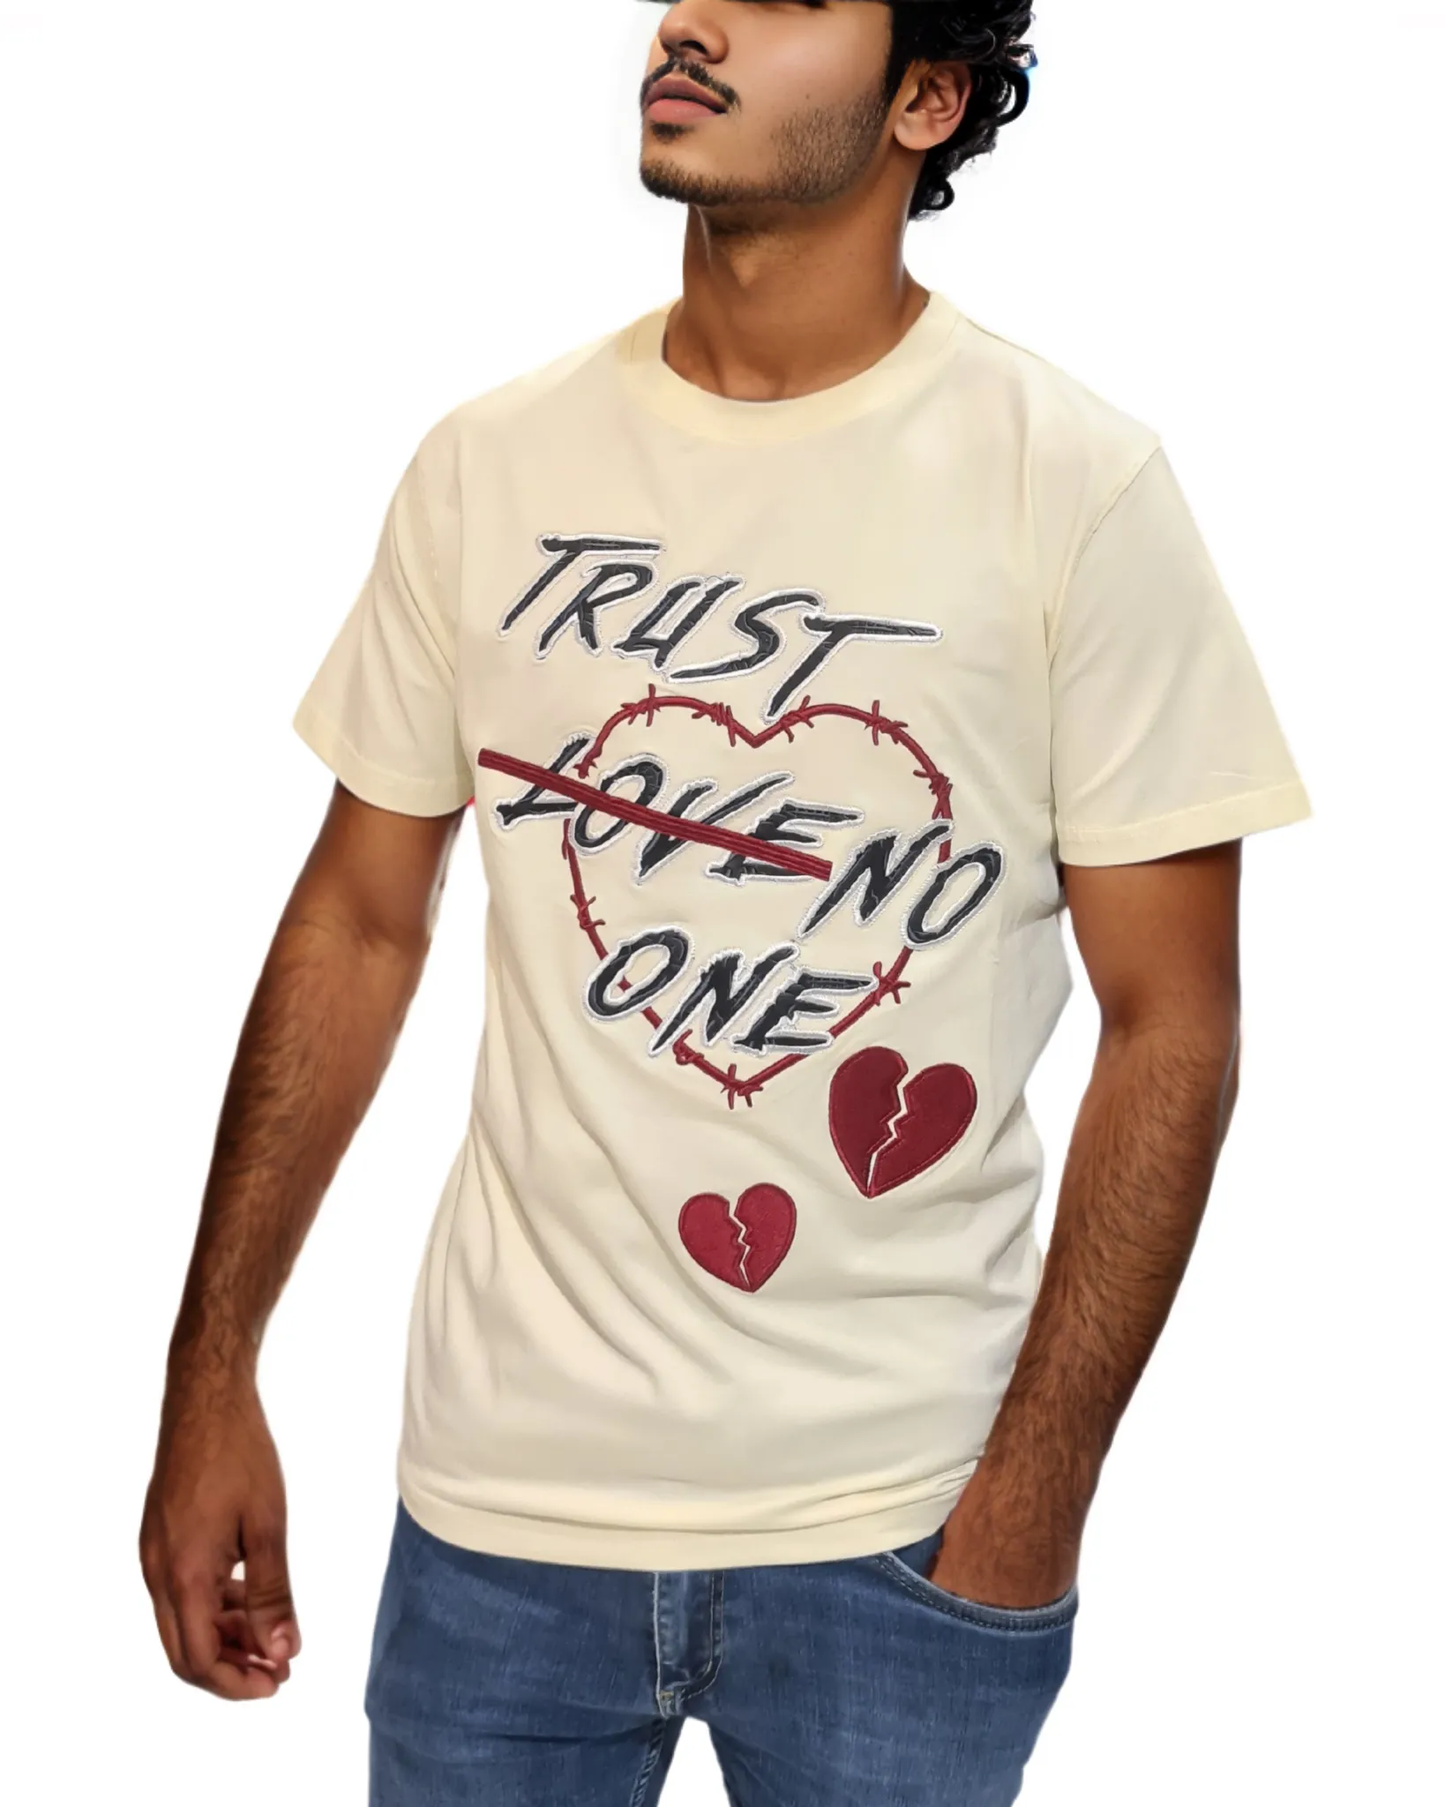 Trust No One Shirt